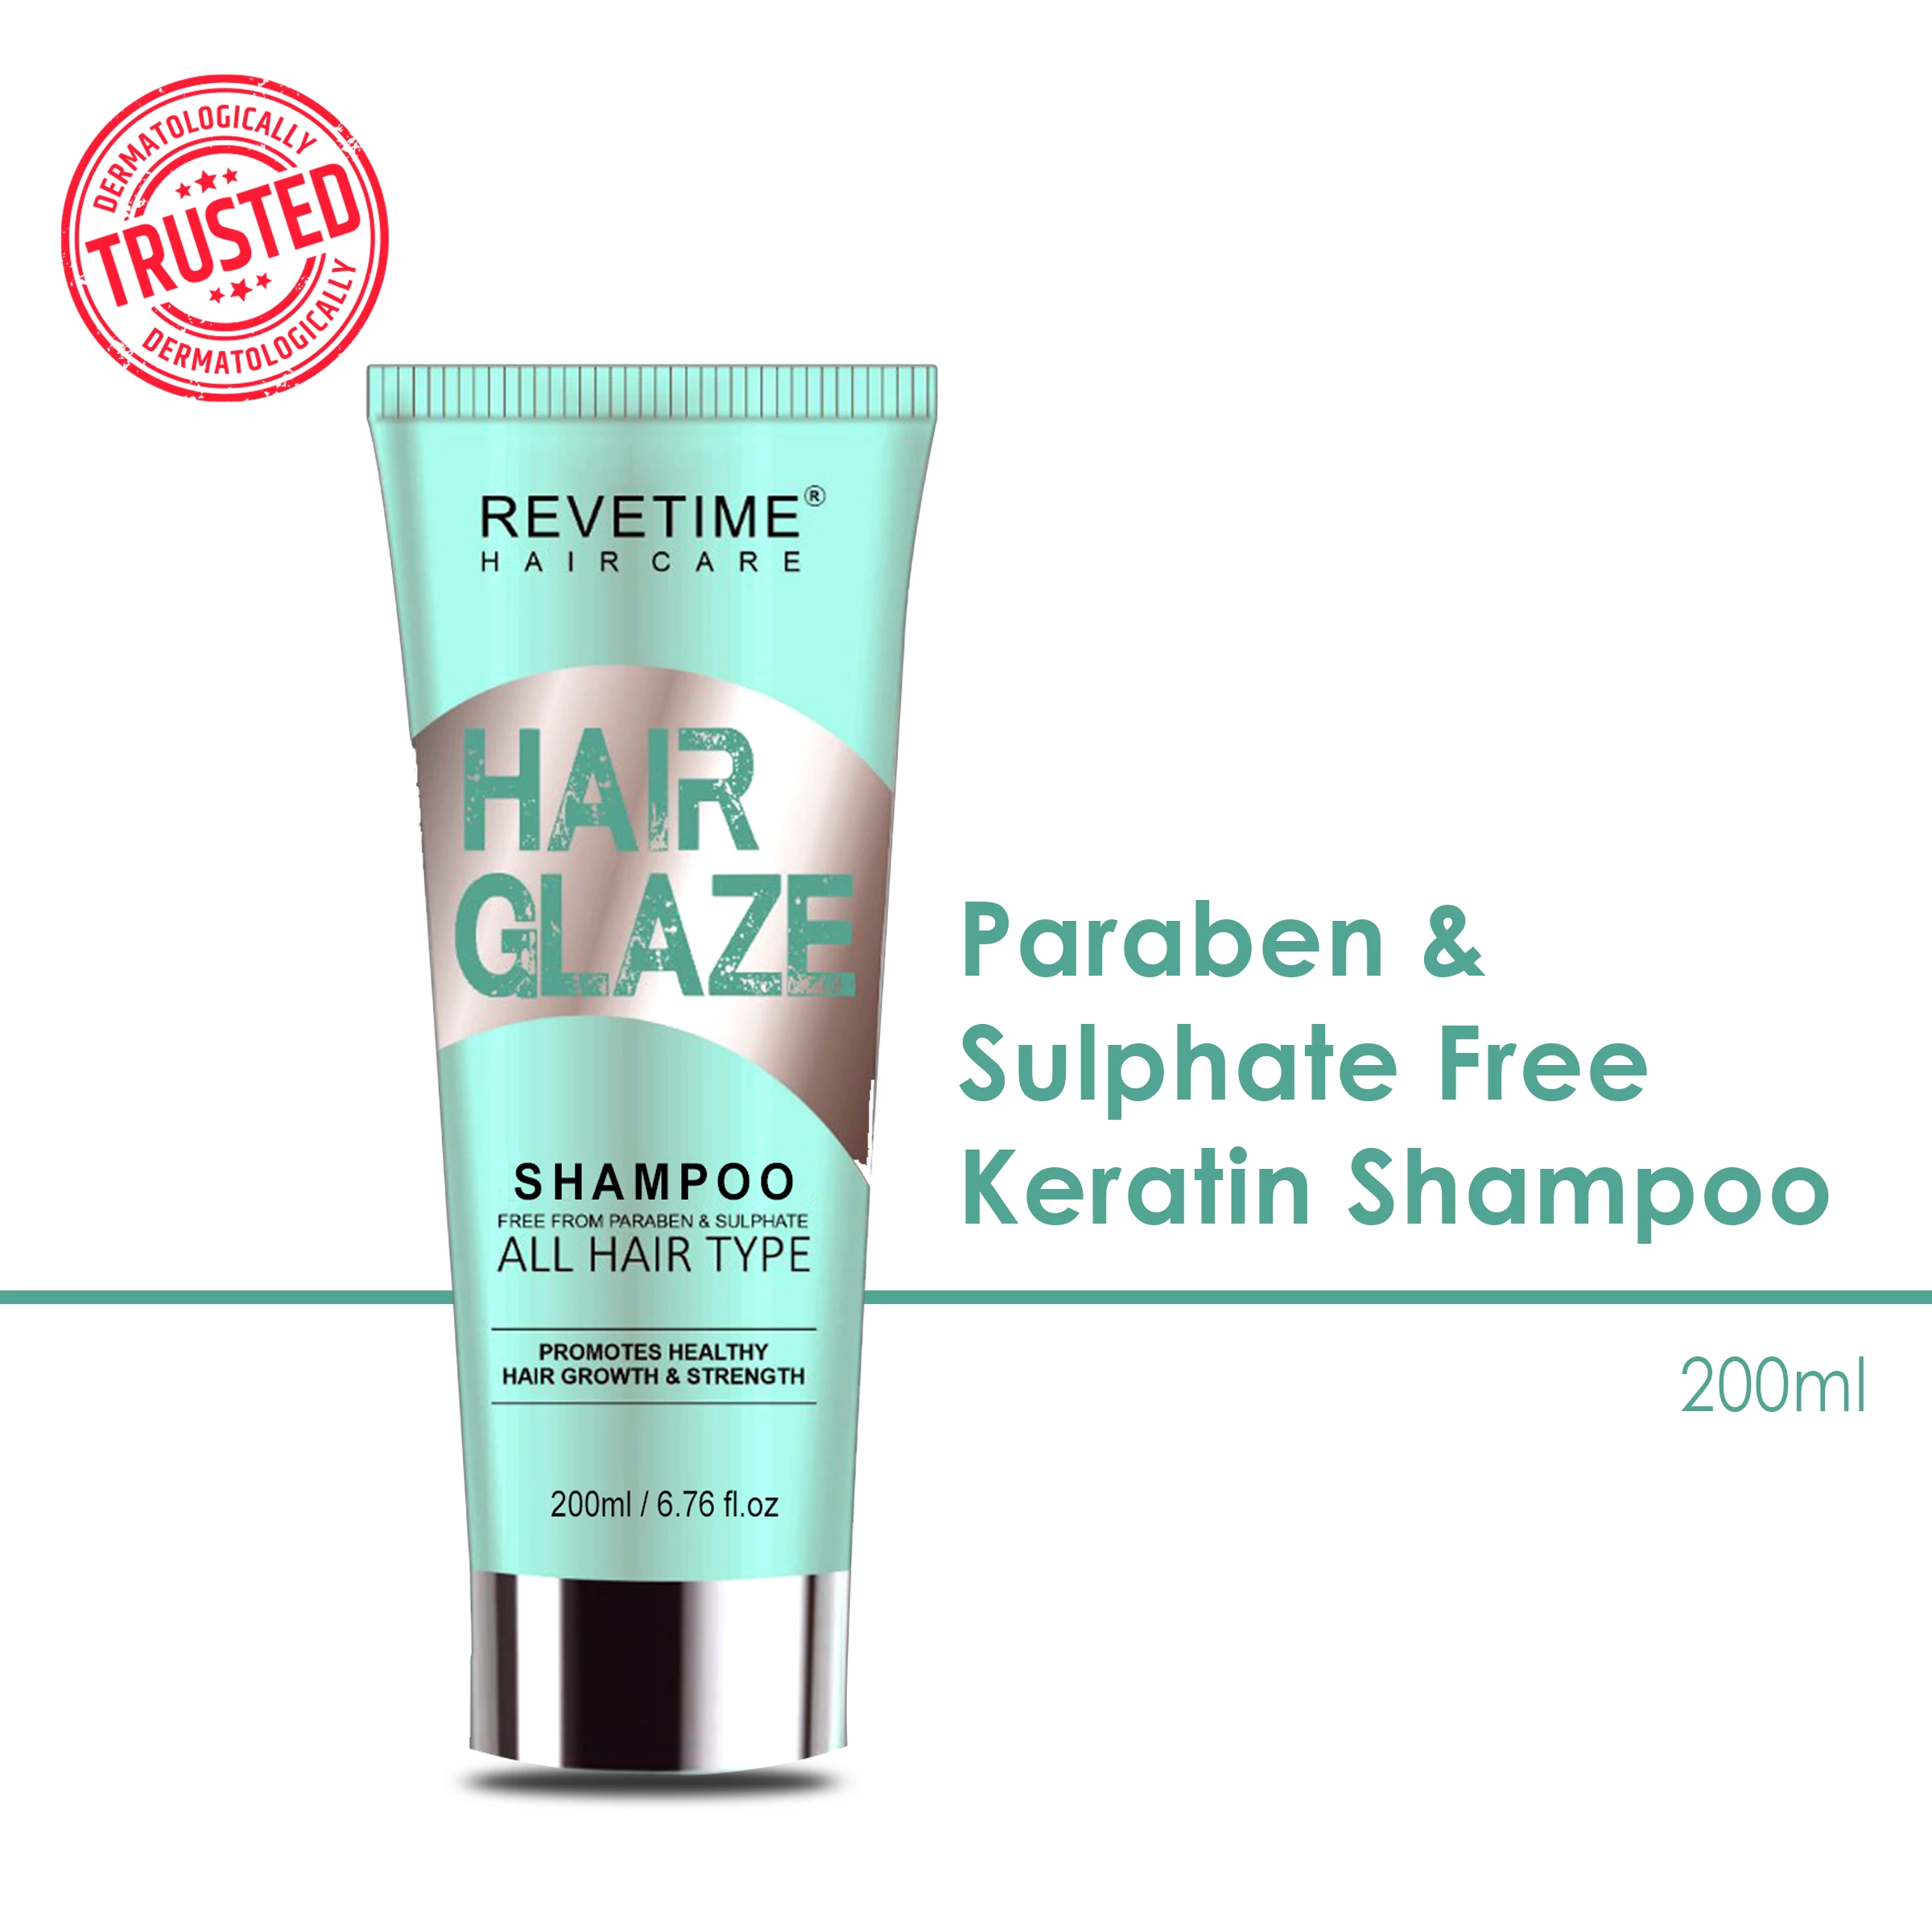 Revetime Hairglaze Sulphate Free anti hairfall Shampoo